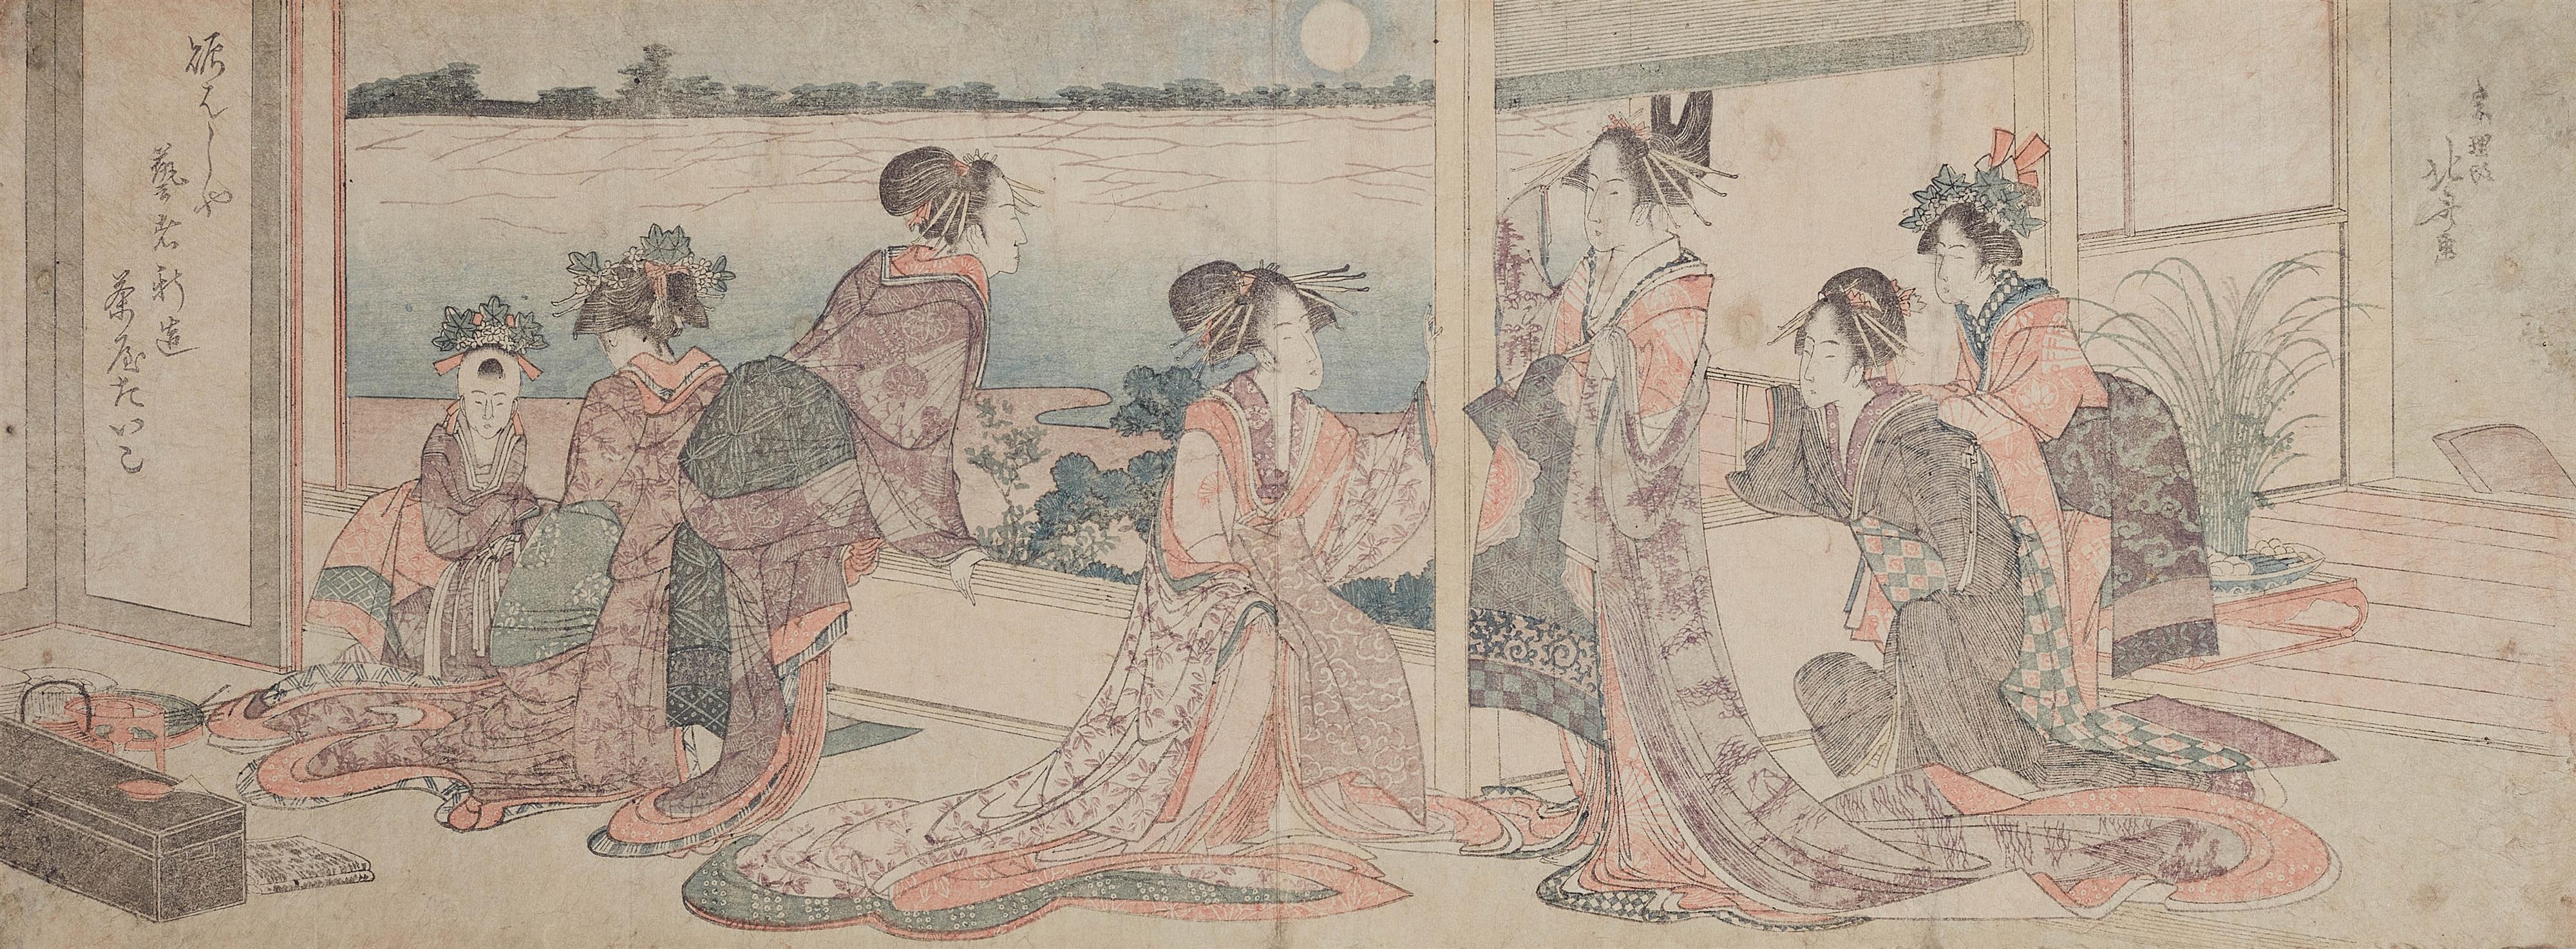 Katsushika Hokusai - Courtesans, geisha, shinzô and kamuro enjoying the full moon - image-1